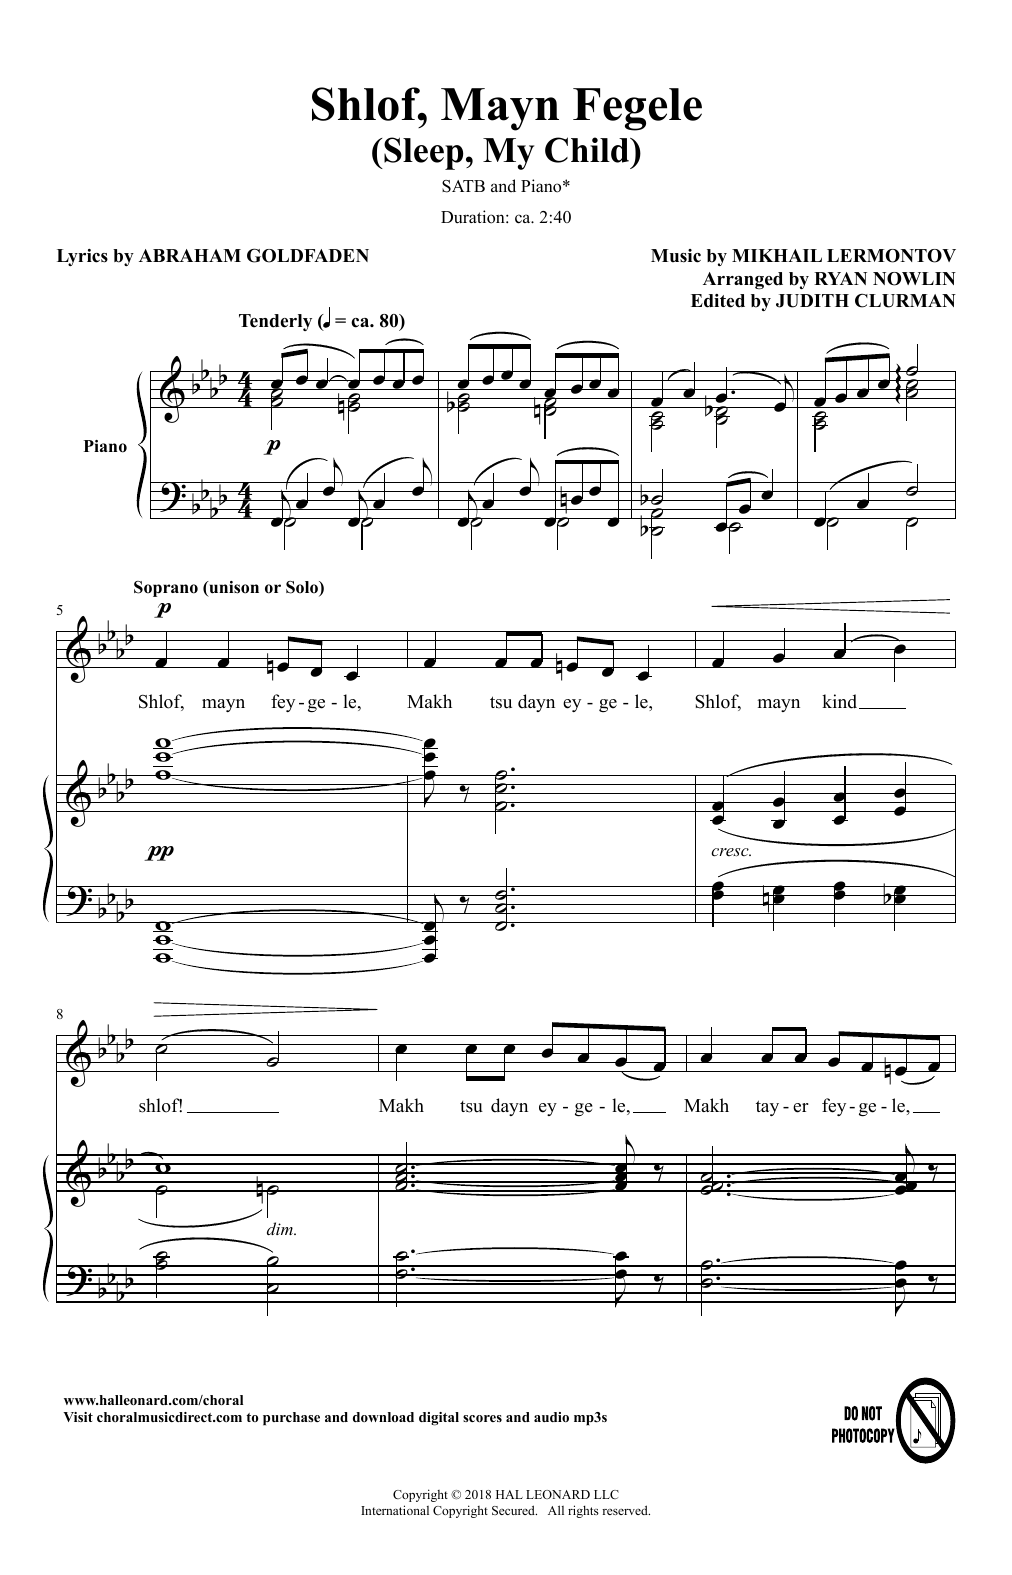 Mikhail Lermontov Shlof, Mayn Fegele (A Lullaby) (arr. Ryan Nowlin) Sheet Music Notes & Chords for SATB Choir - Download or Print PDF